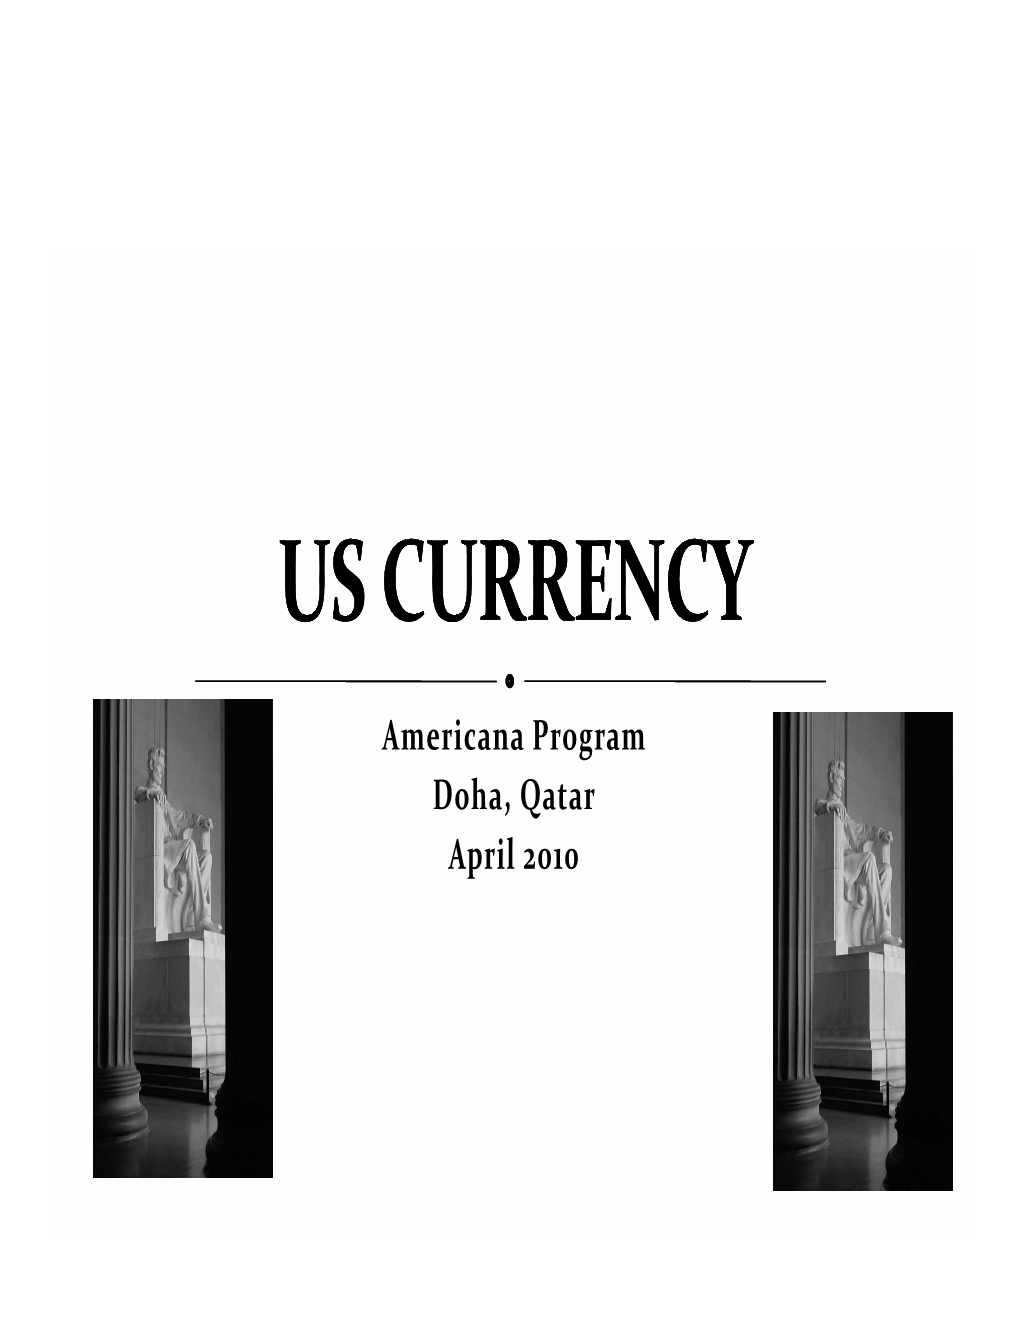 Americana Program Doha, Qatar April 2010 Yus CURRENCY Ypaper Money Ycoins Made by Bureau of Engggraving and Printing (U.S